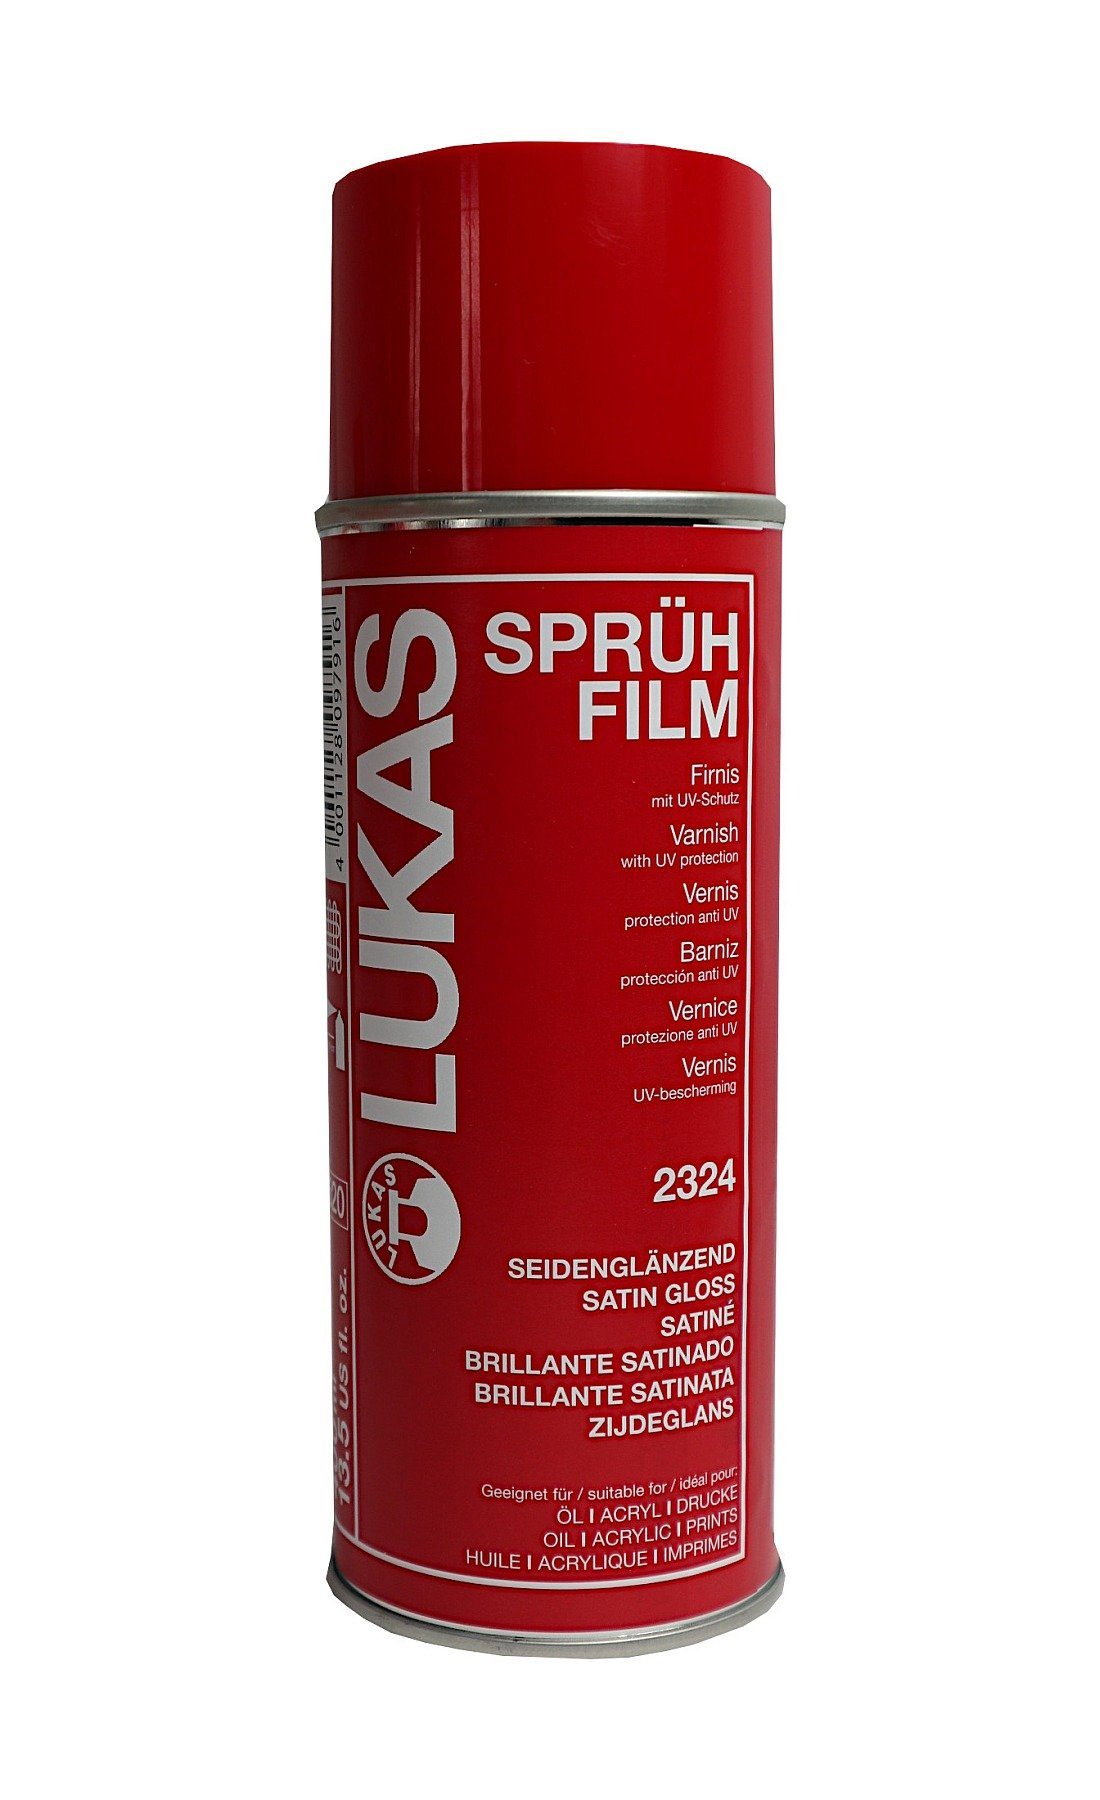 Lukas-Nerchau GmbH Firnis LUKAS Sprühfilm seidenglänzend, 400 ml